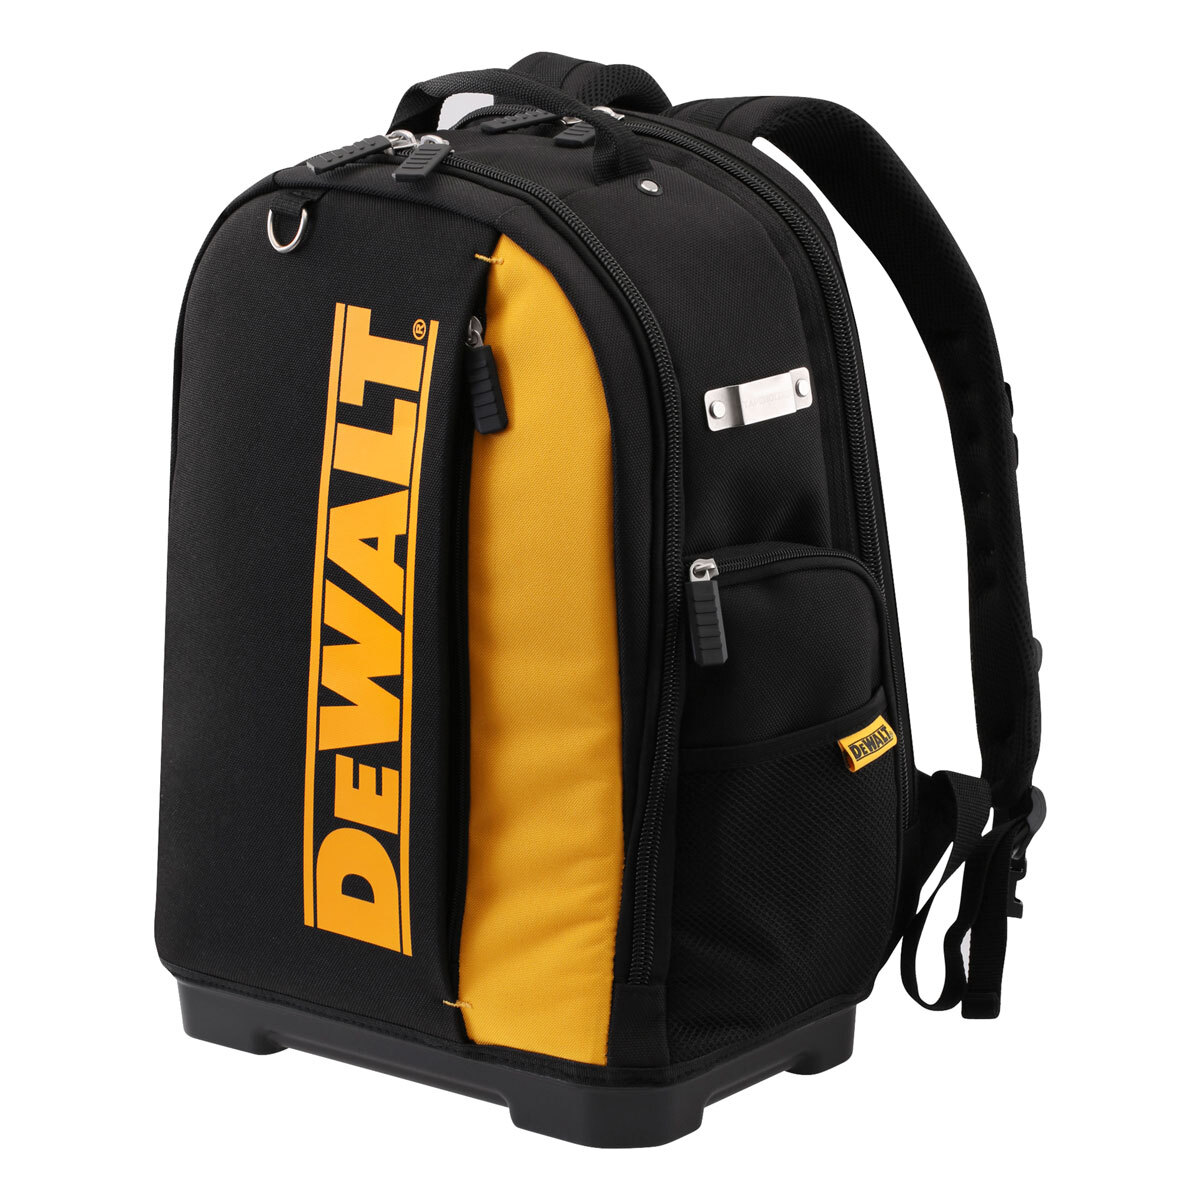 Cut out image of DeWalt backpack on white background